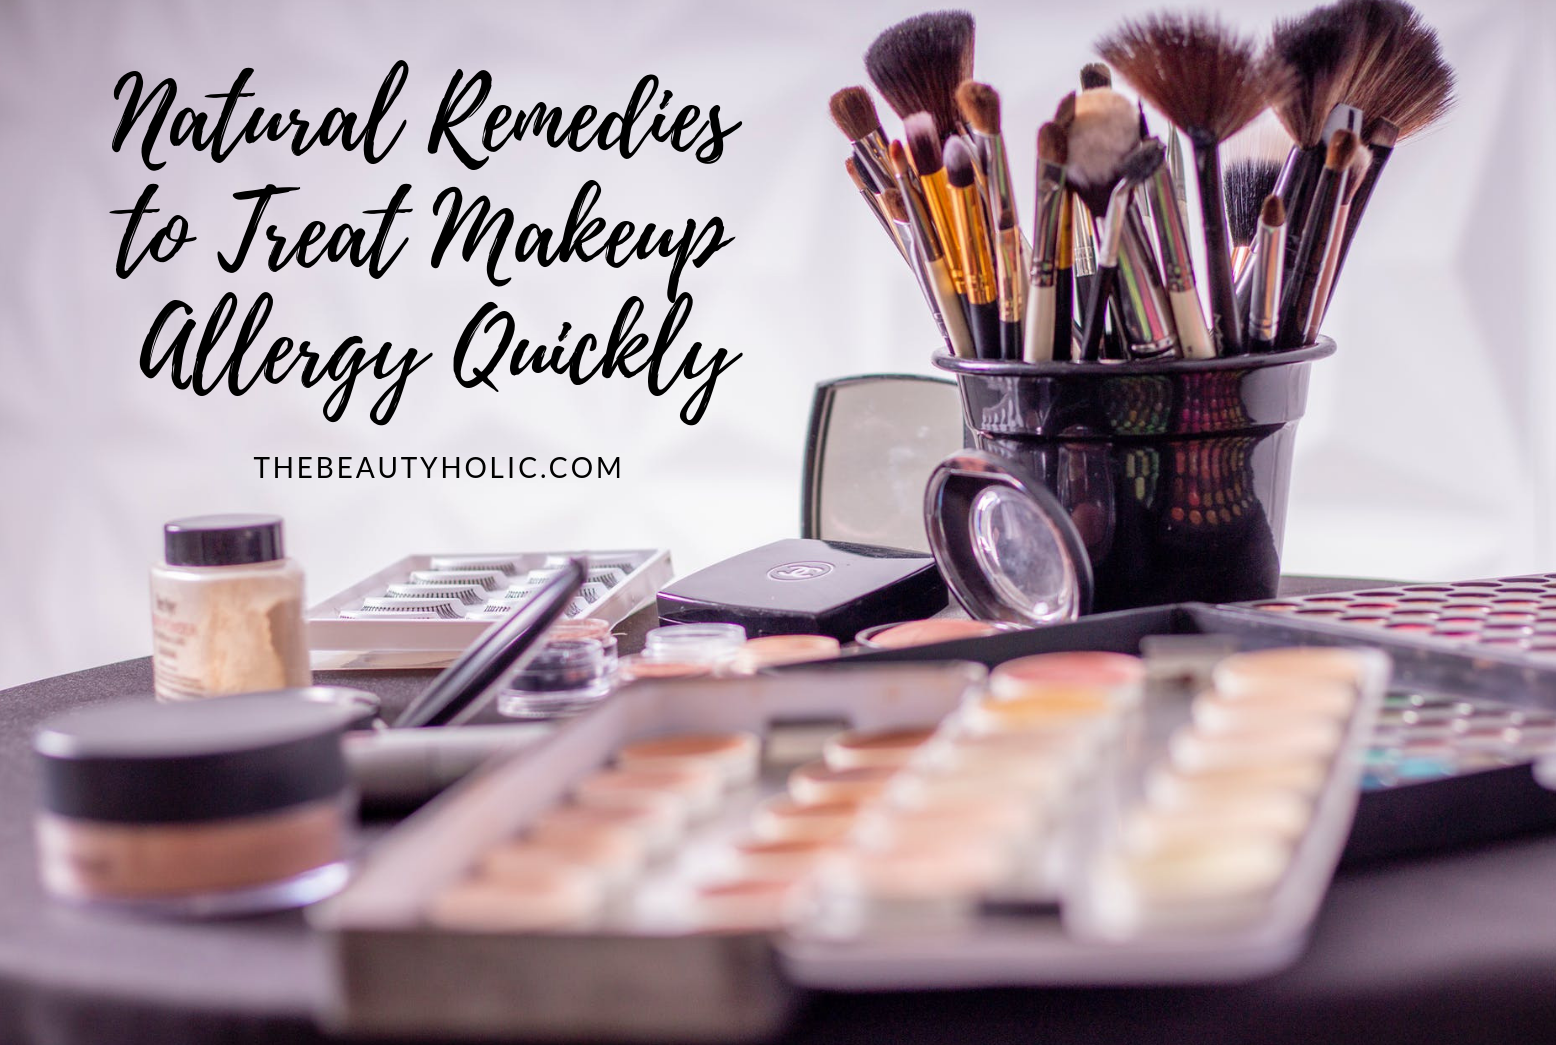 12 Natural Remedies to Treat Makeup